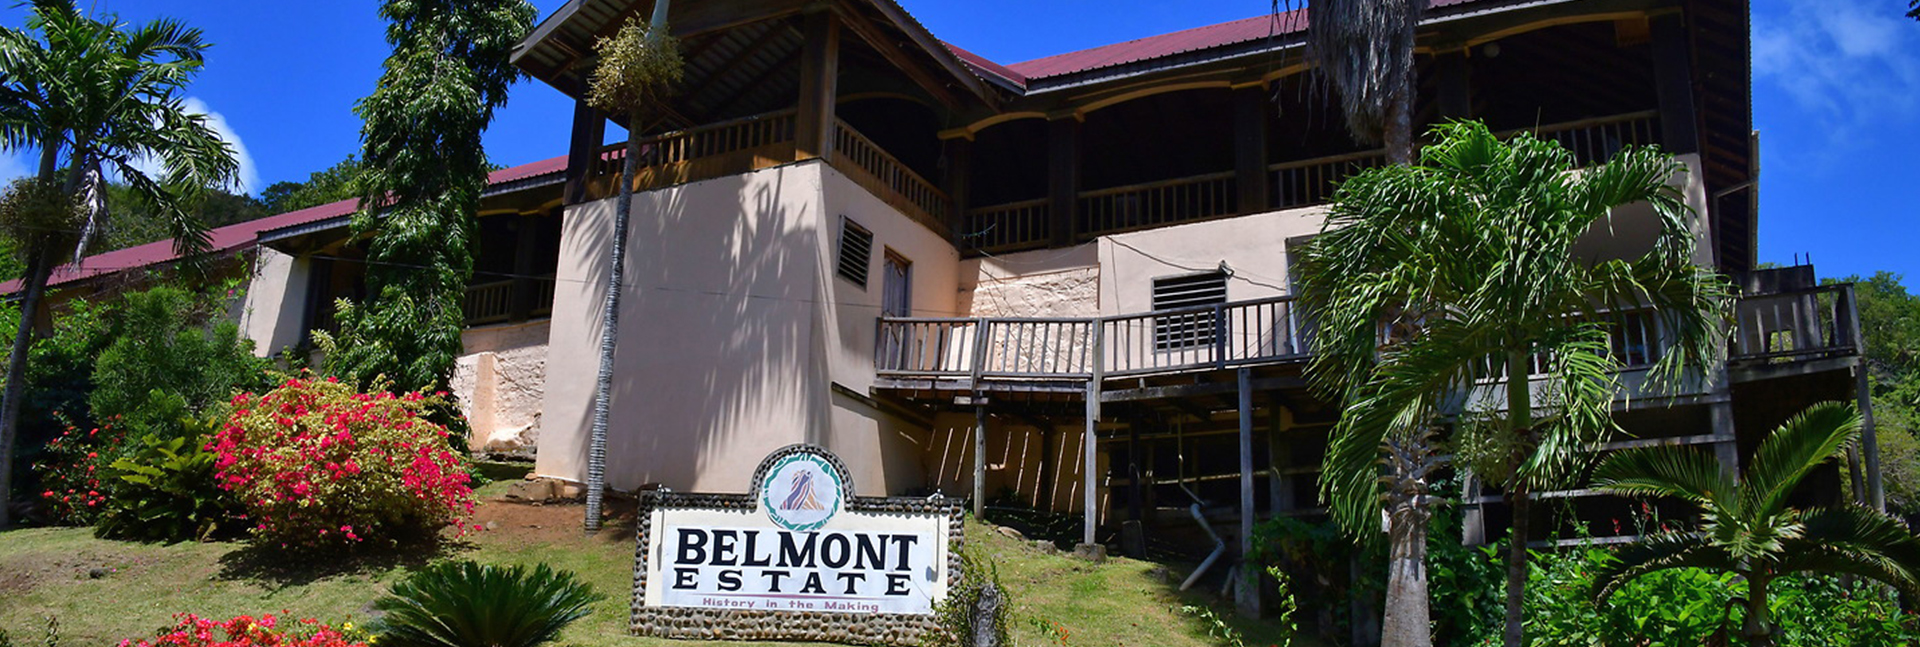 belmont estate